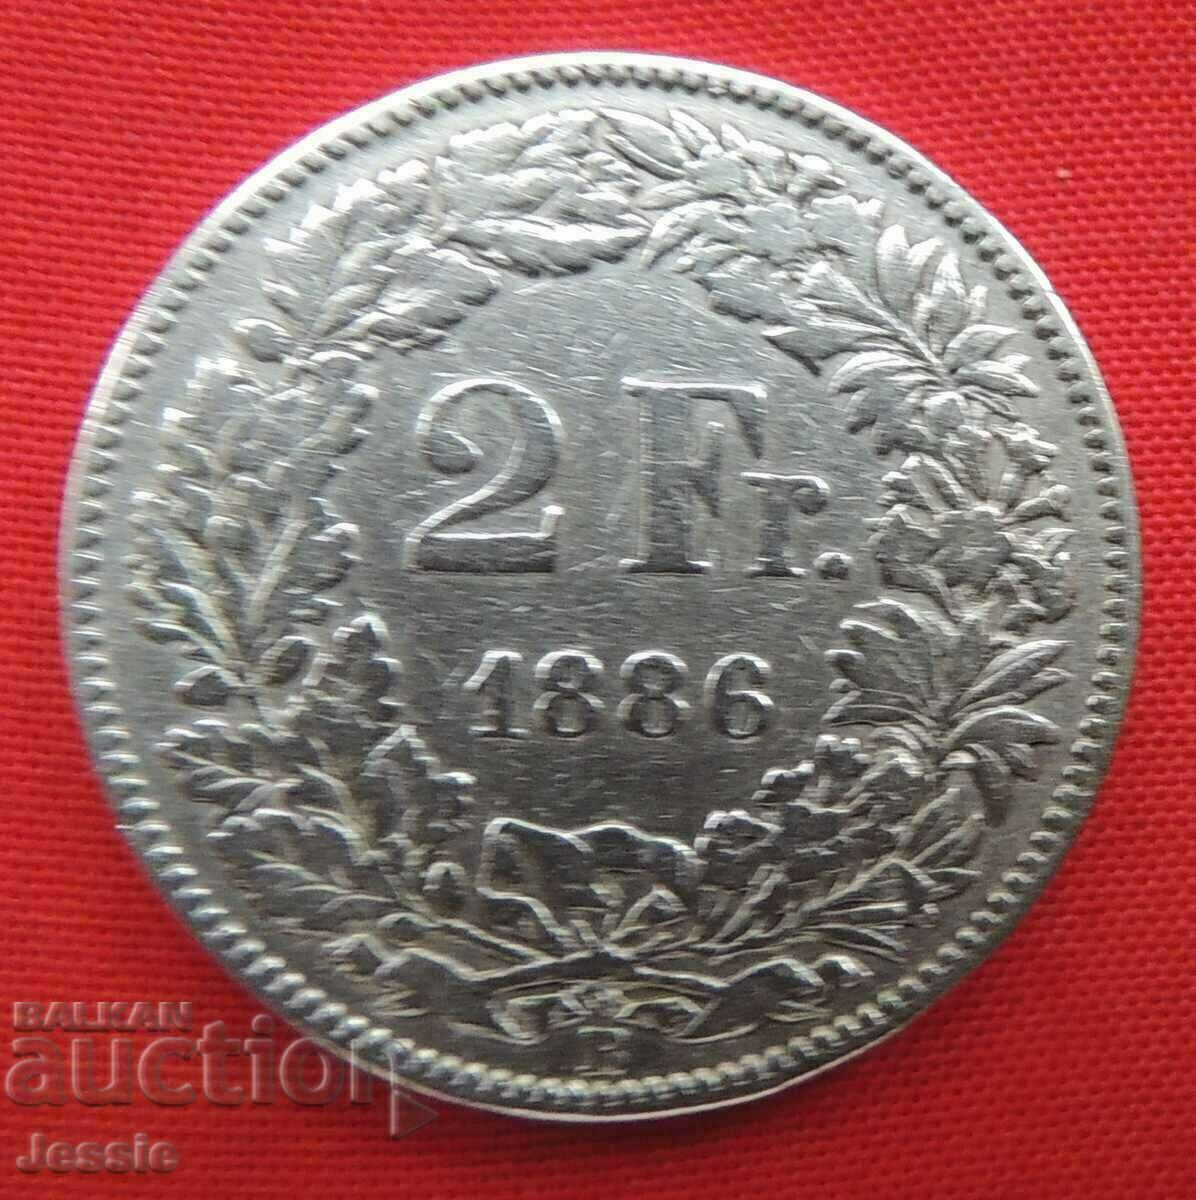 2 Francs 1886 B Switzerland Silver